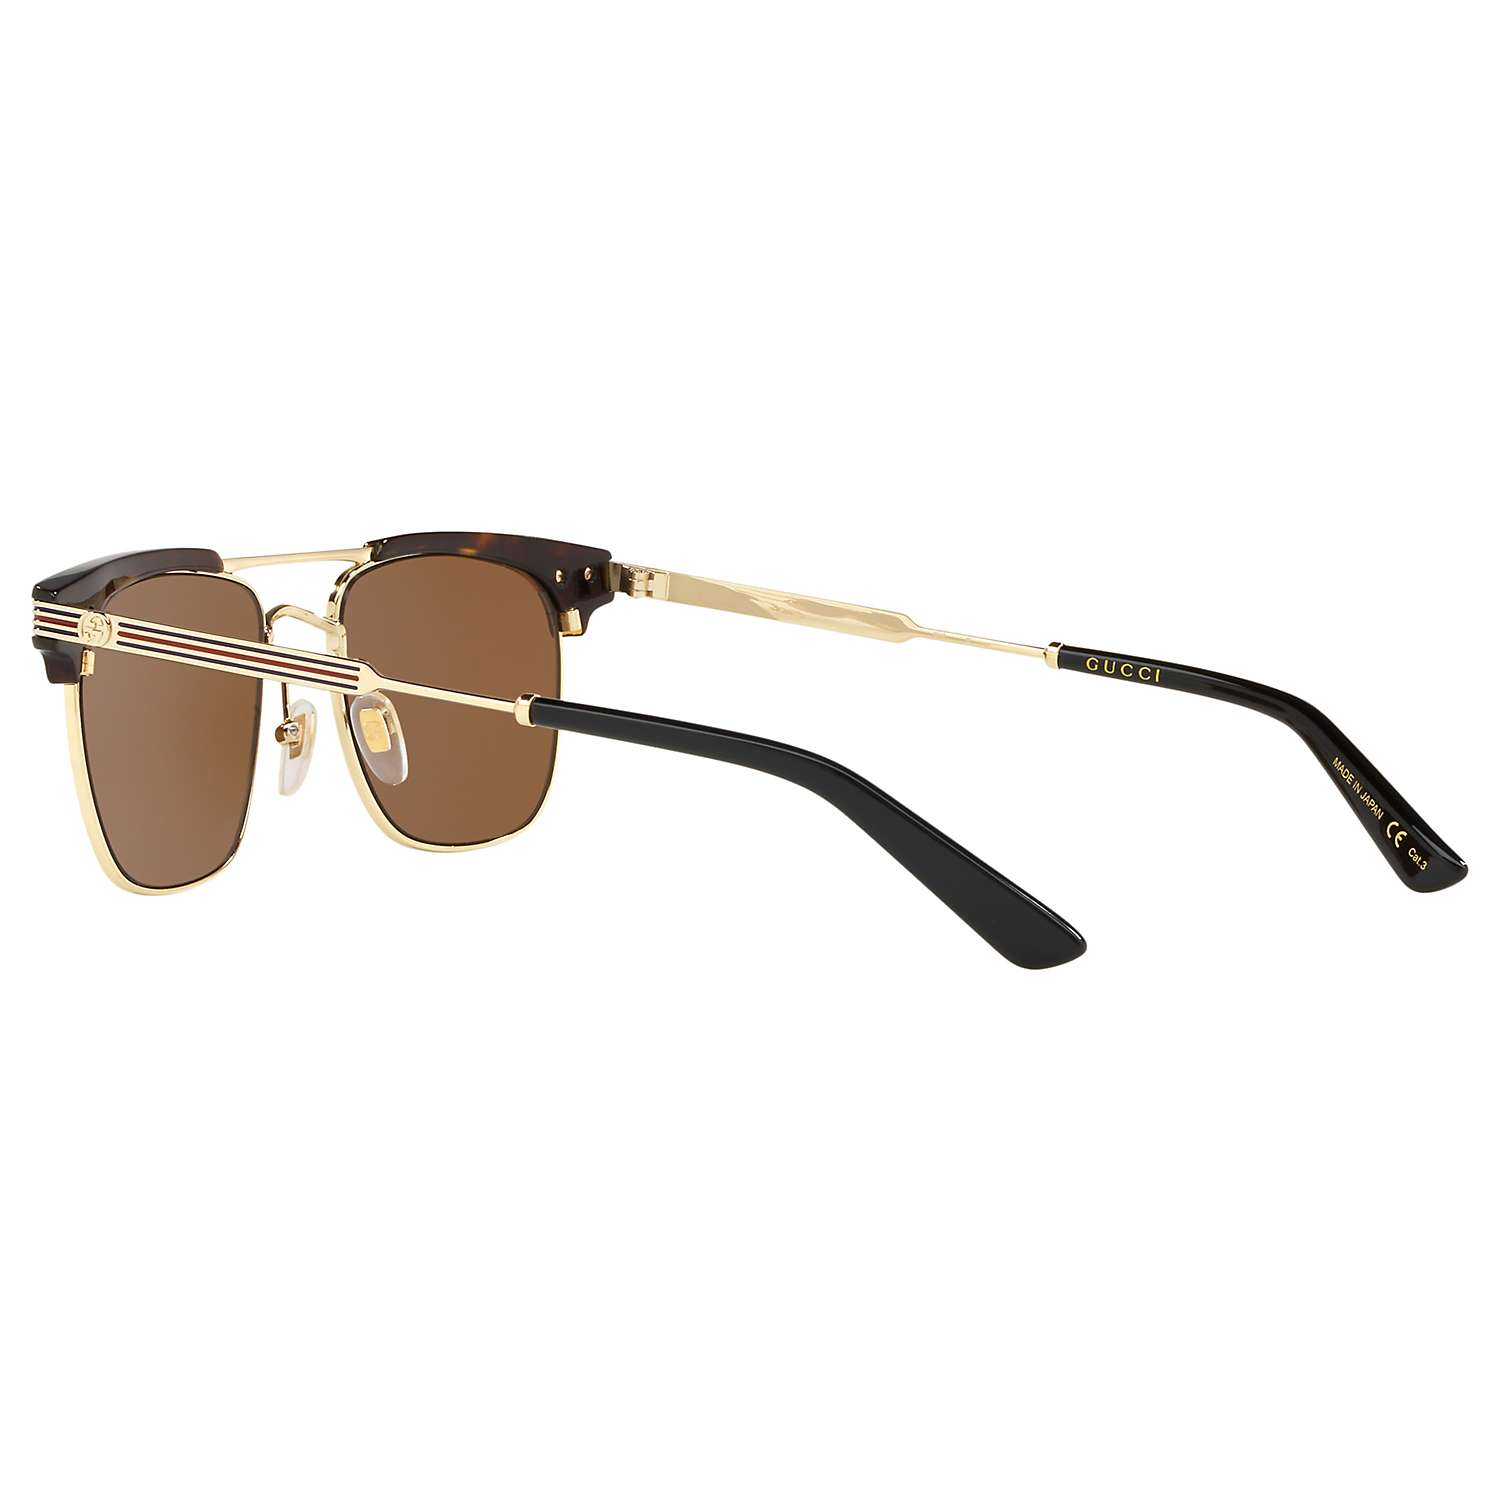 Buy Gucci GC001132 Men's Retangular Sunglasses, Brown/Gold Online at johnlewis.com